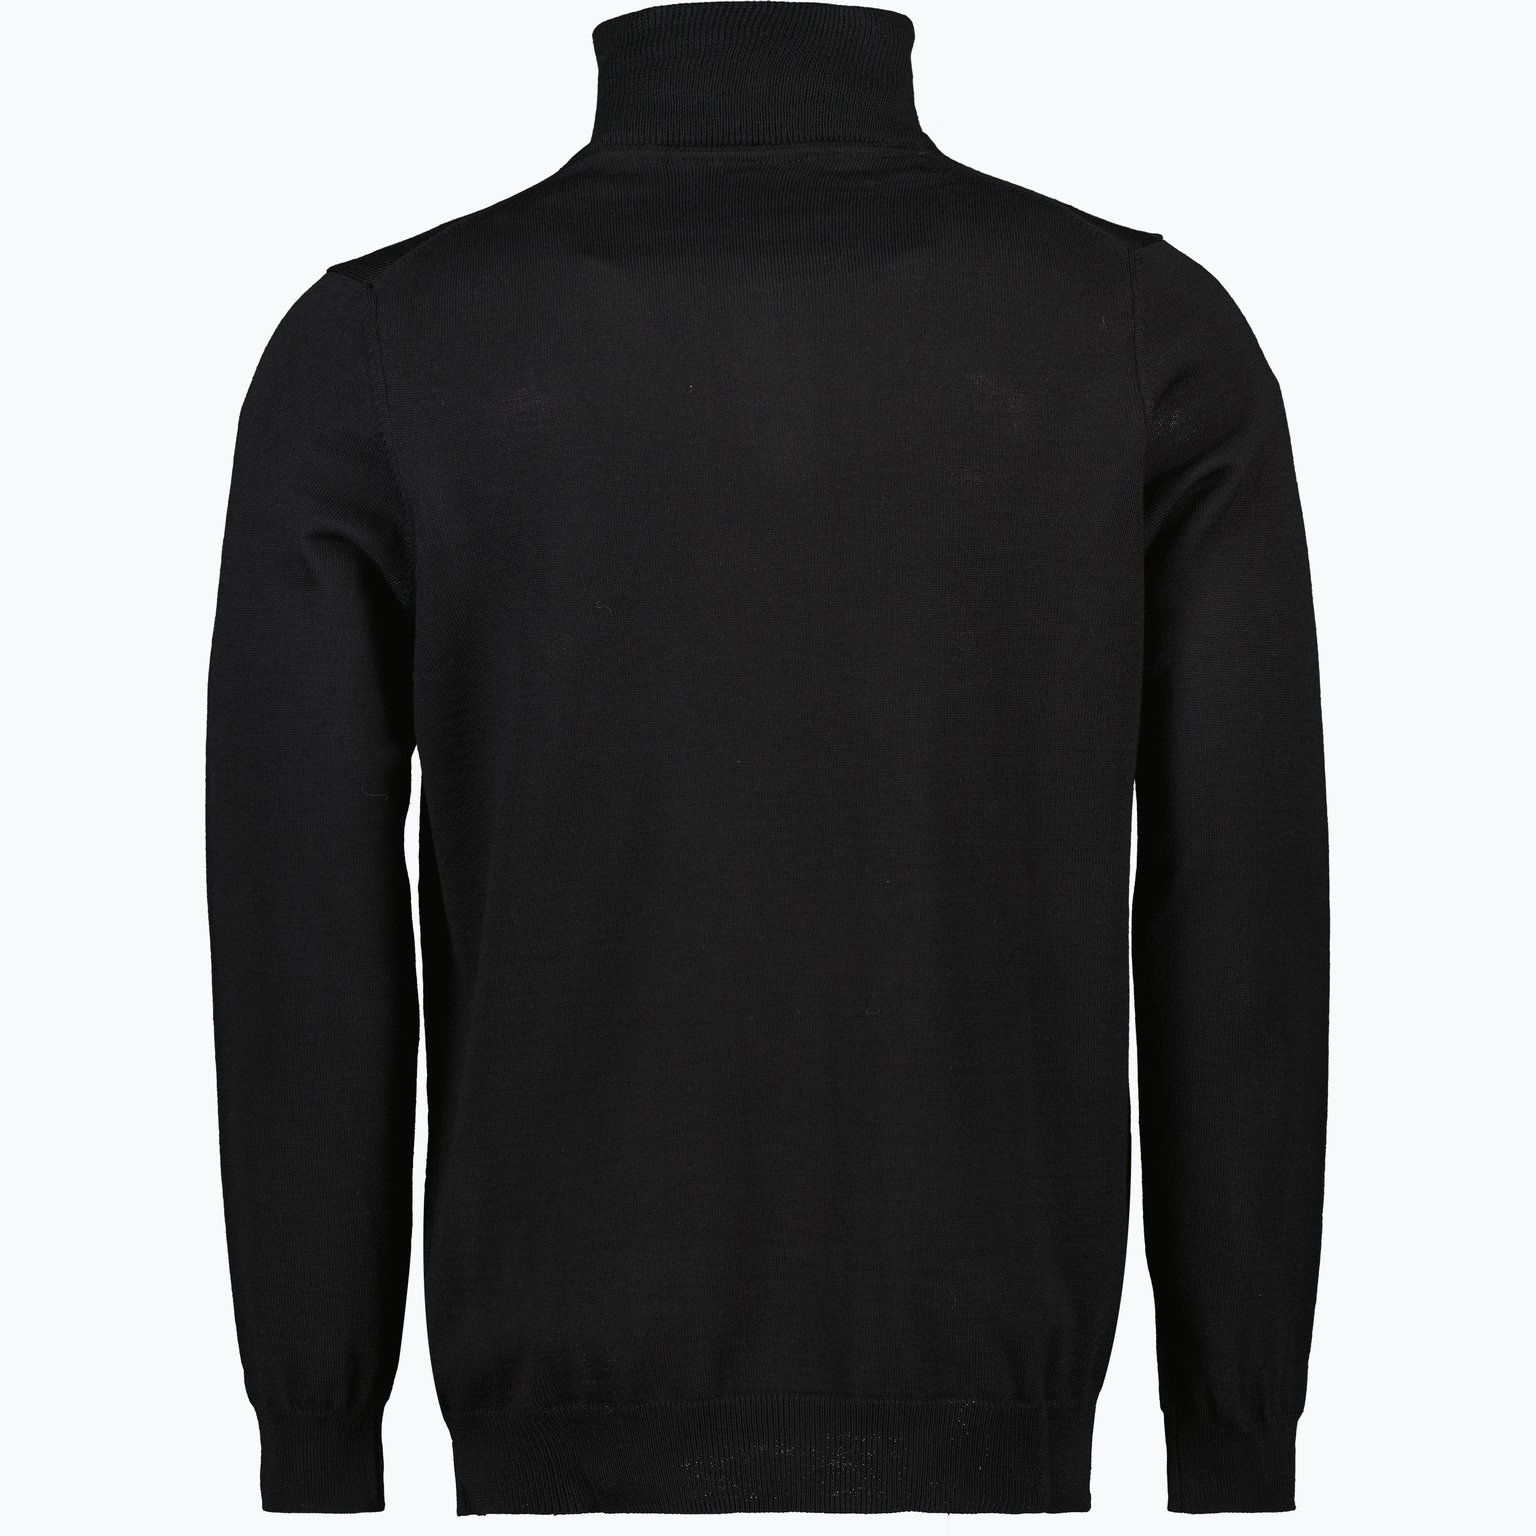 Golf Core 1/4 Zip Merino tröja